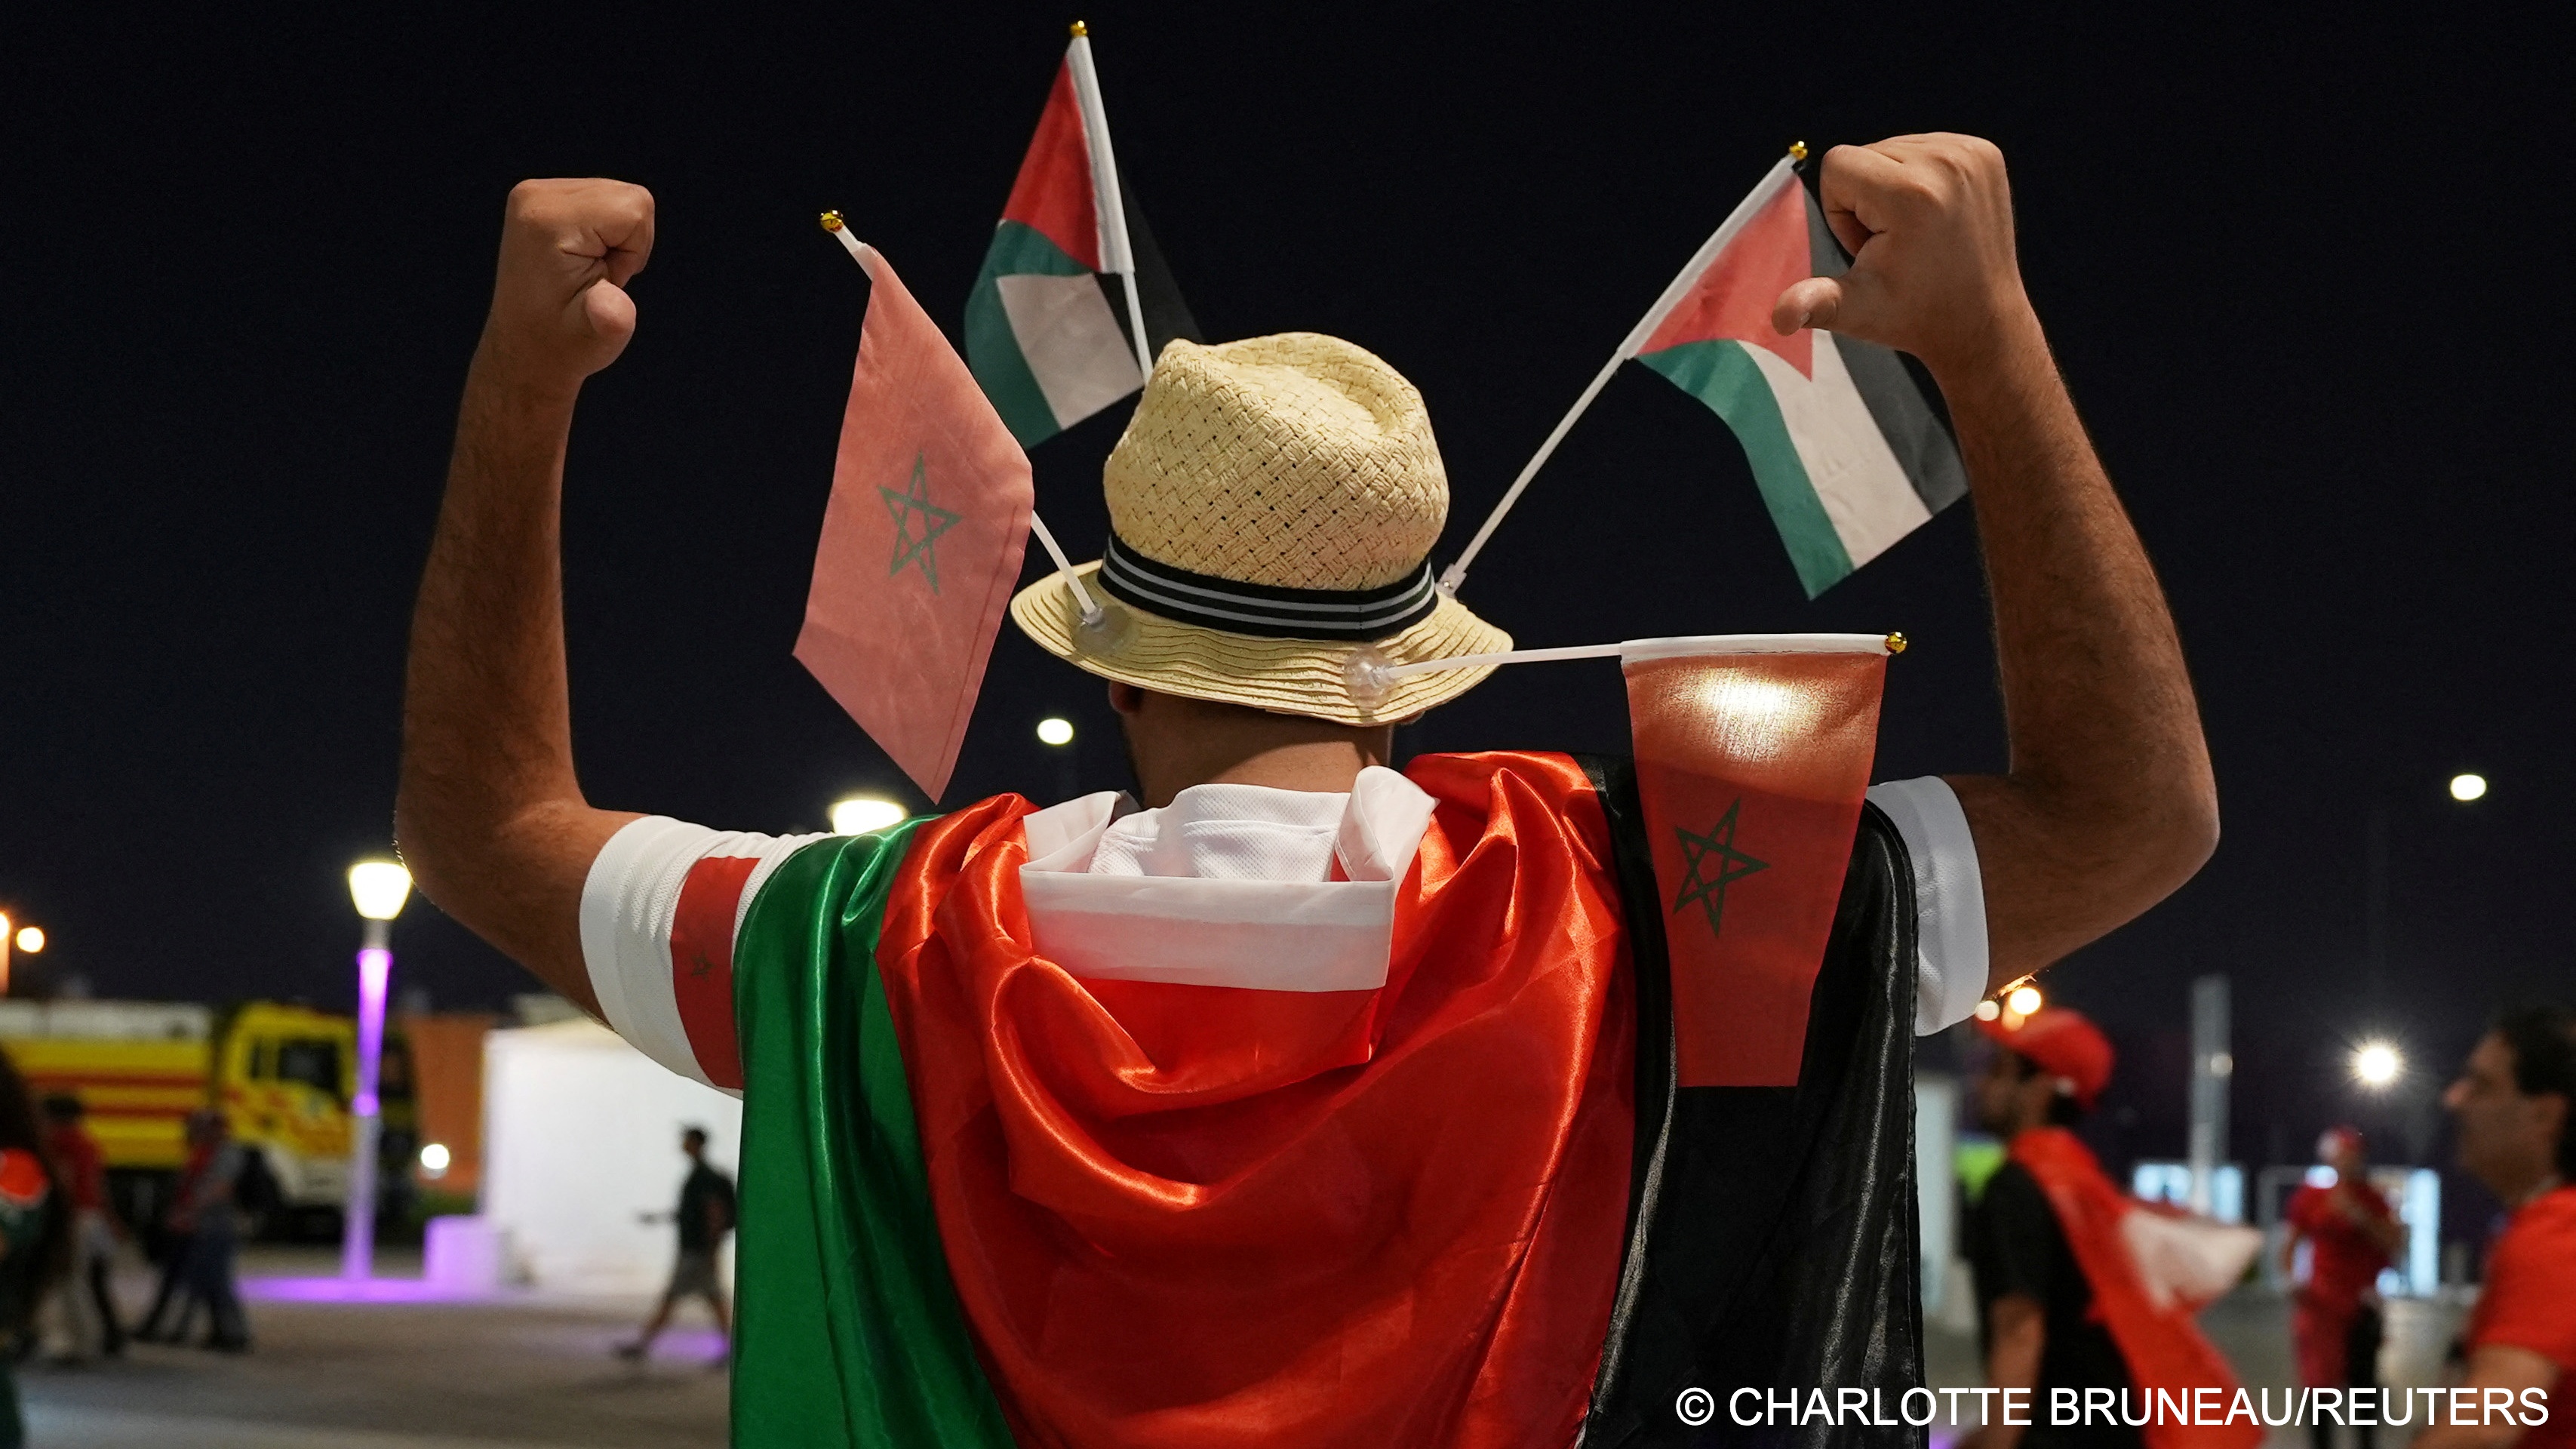 General view as a fan poses wearing a Palestine flag outside Al Thumama stadium, Doha, Qatar (photo: REUTERS/Charlotte Bruneau)